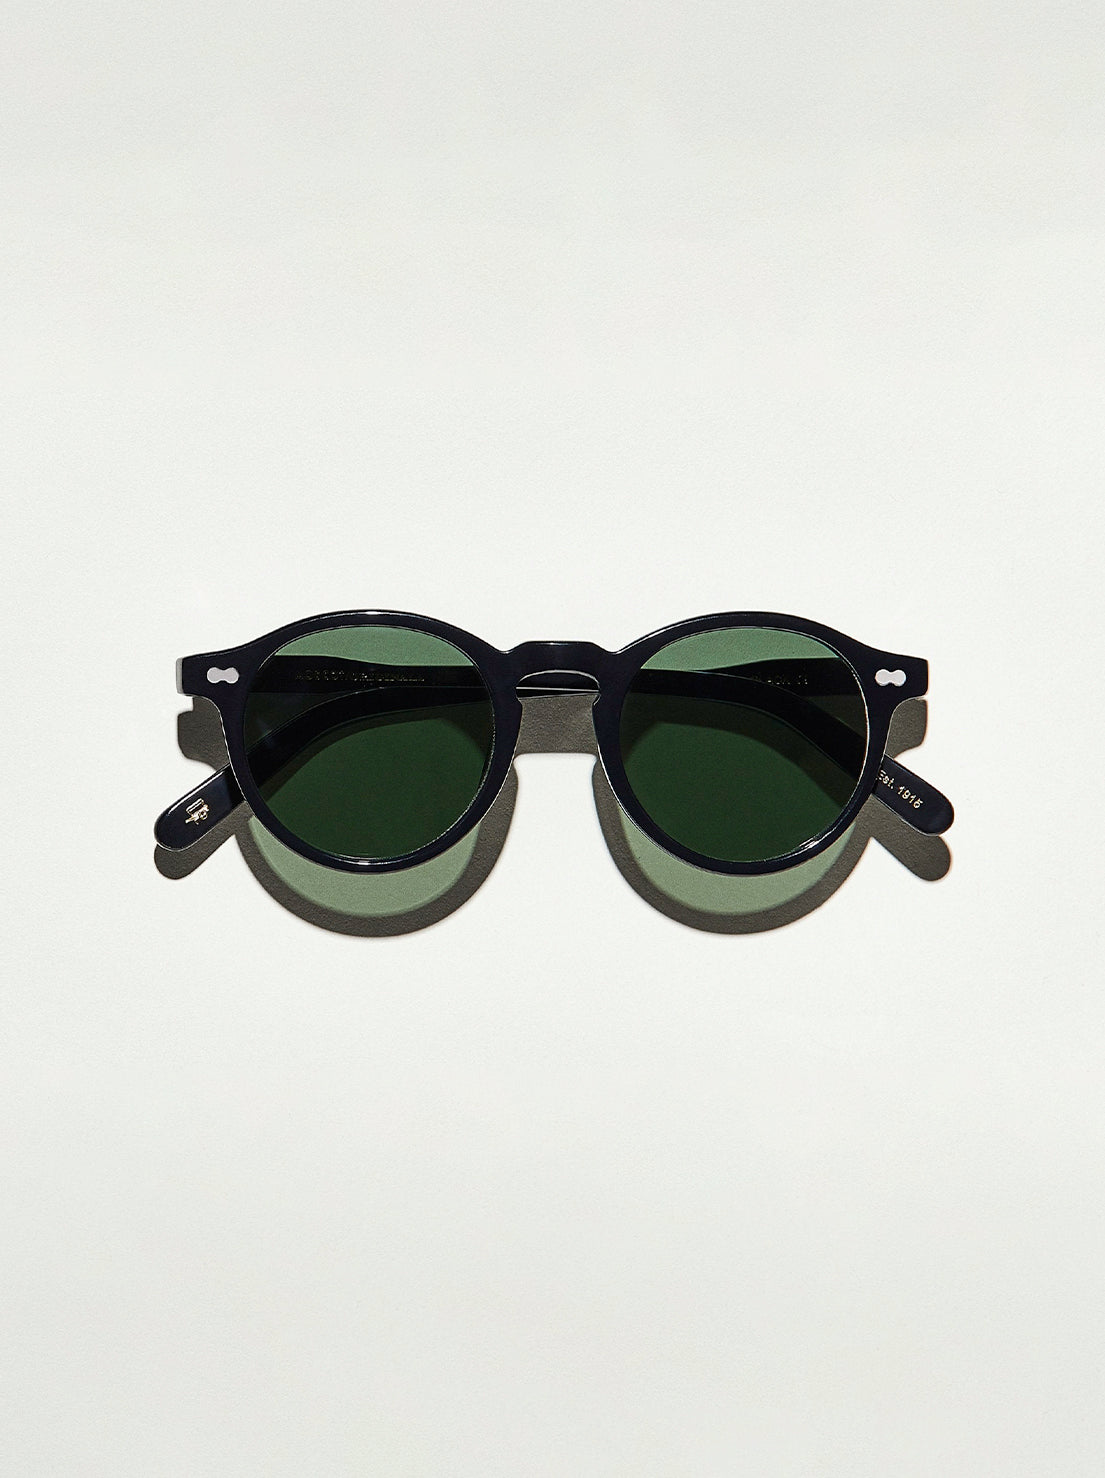 Moscot - Miltzen Sunglasses in Black 46 (Reg) - G15 Lens